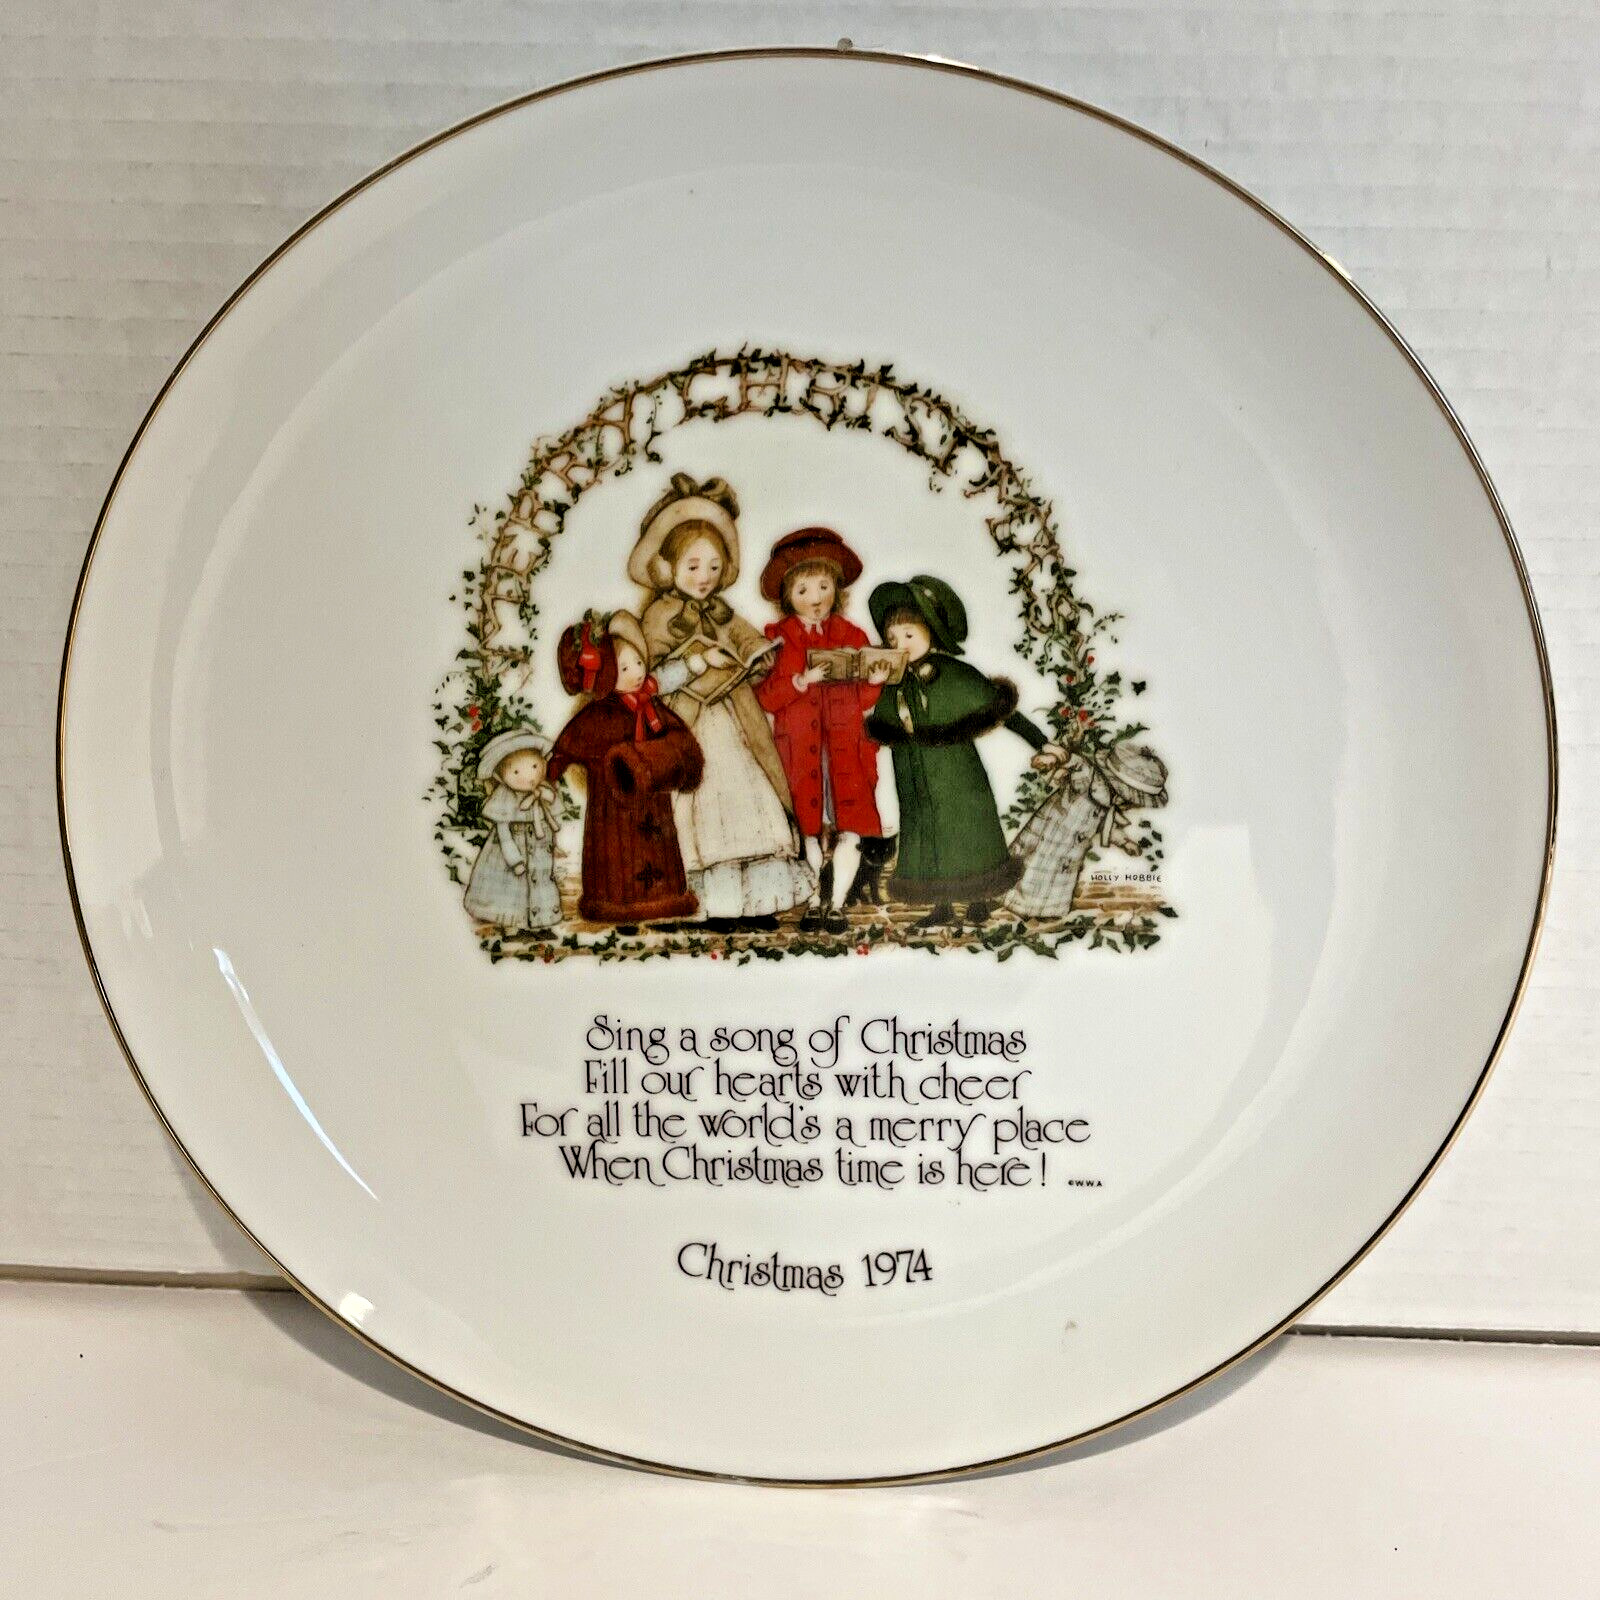 VTG Holly Hobbie Christmas 1974 Porcelain Plate 10 5/8” Commemorative Edition